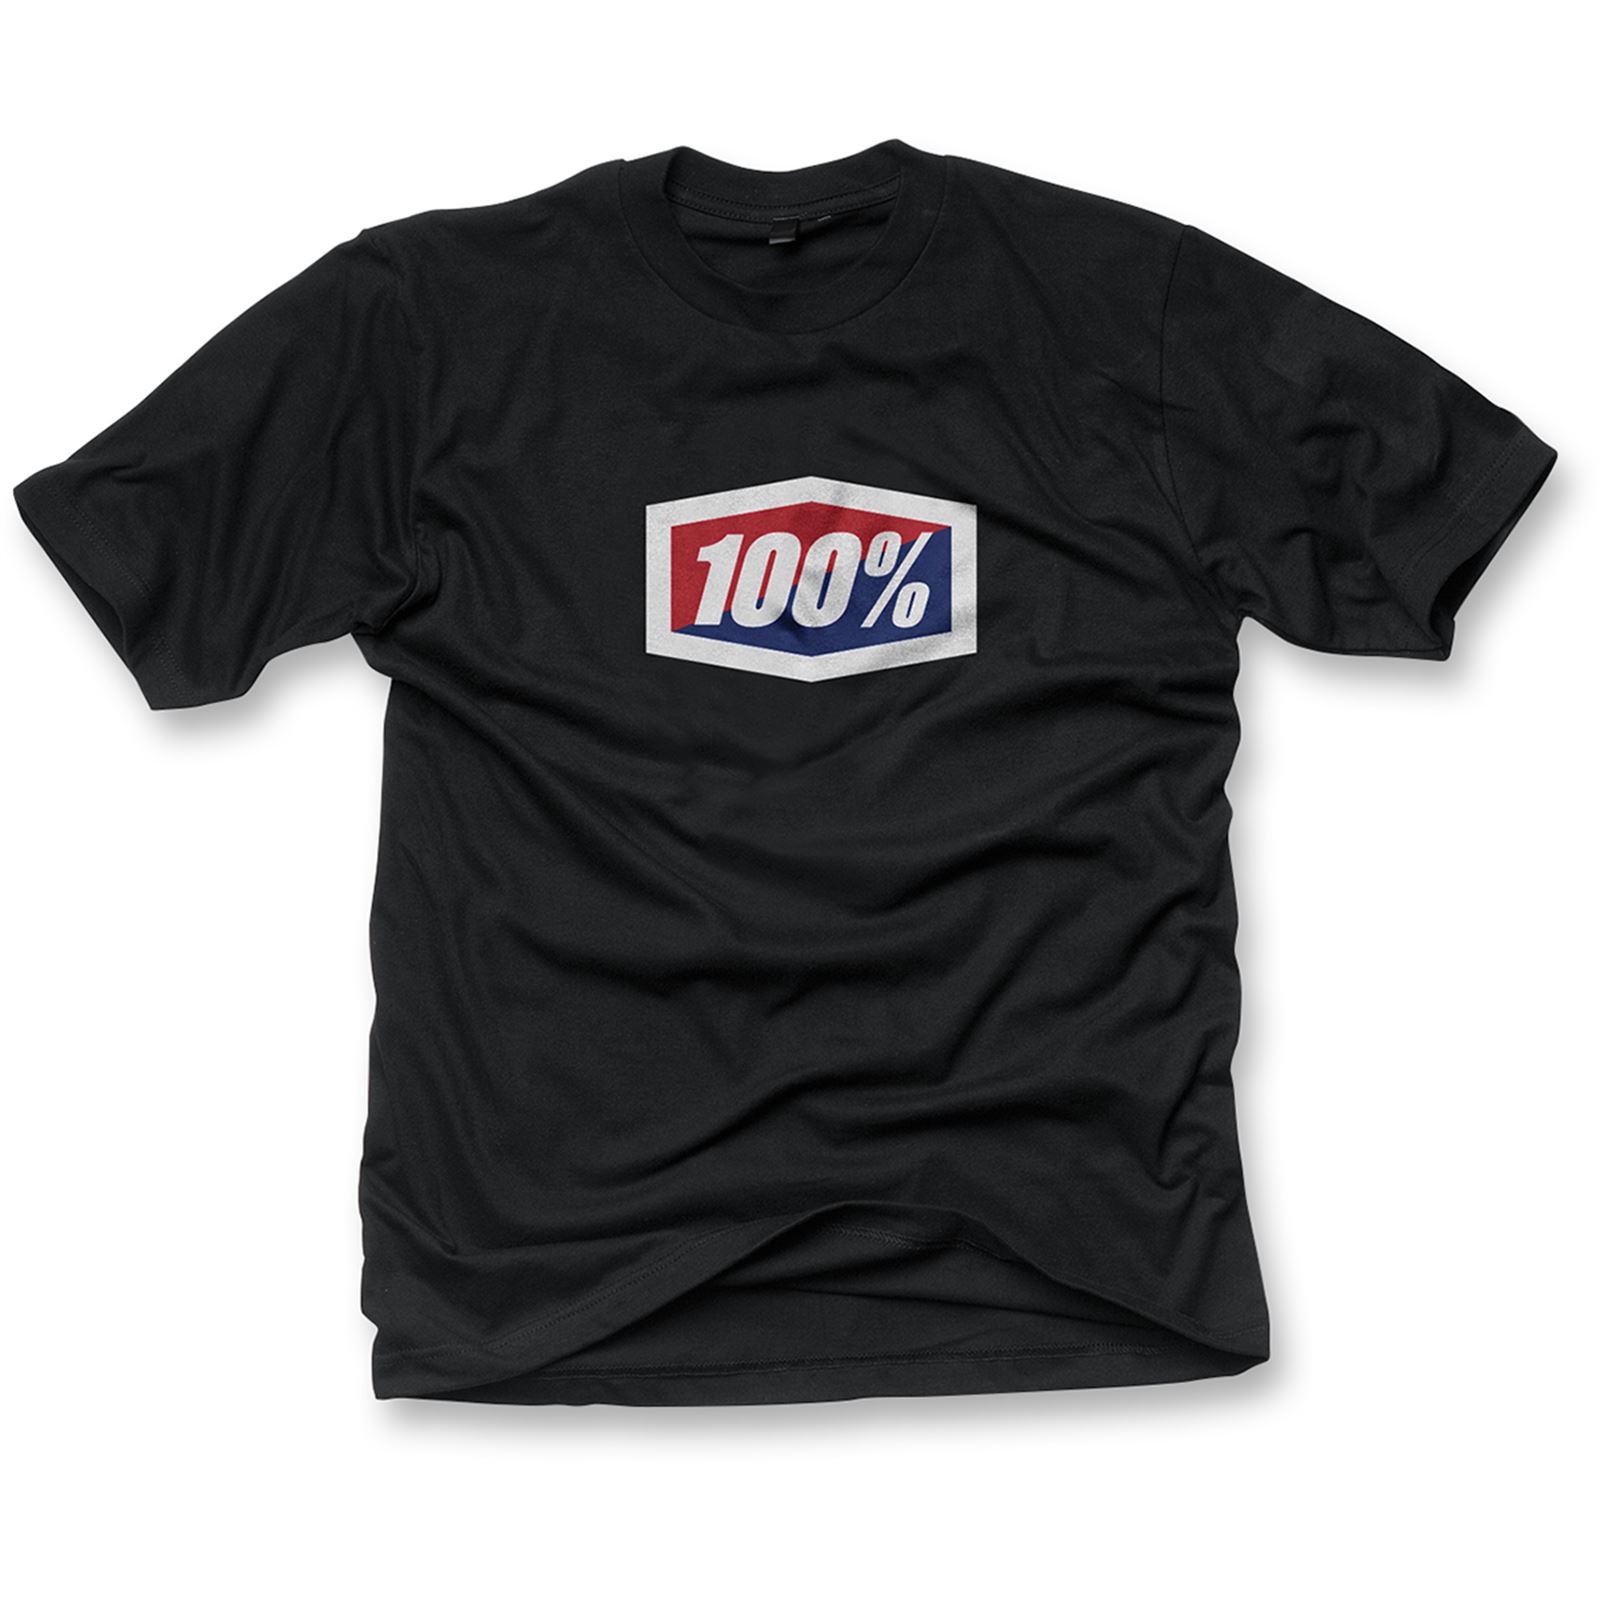 100% Youth Official T-Shirt - Black - Medium